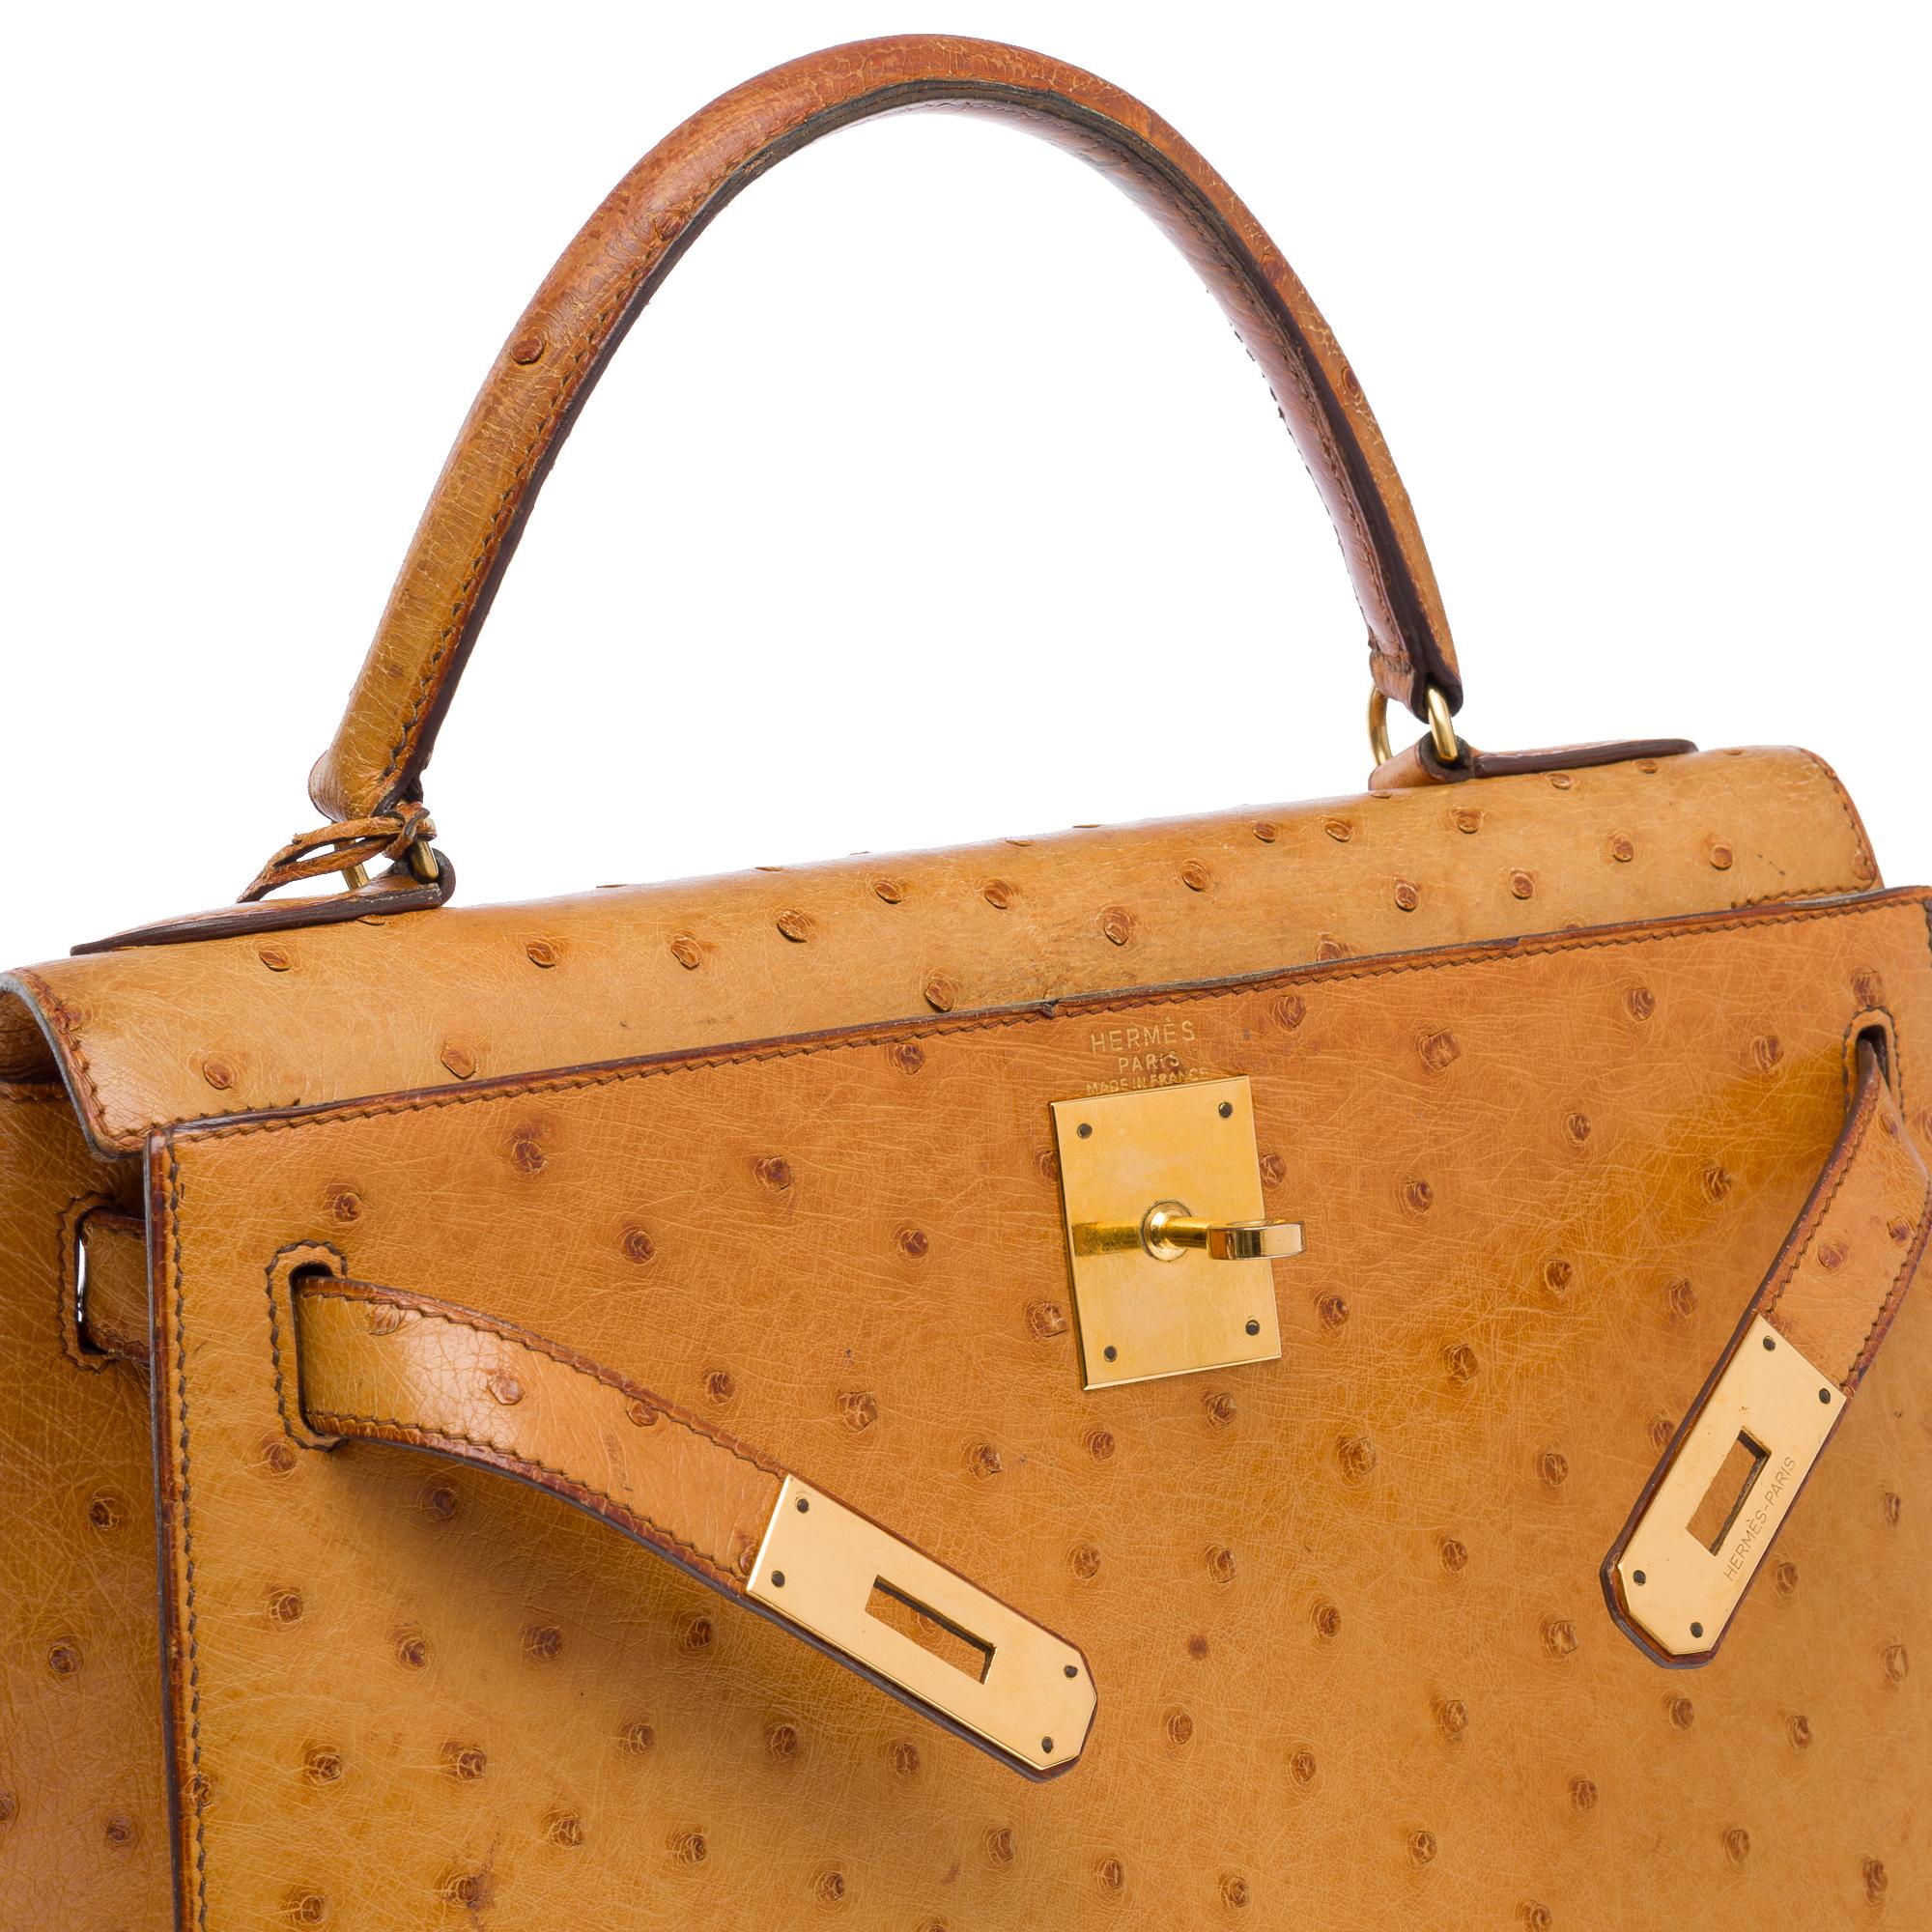 Gorgeous Hermès Kelly 28 sellier handbag in Ostrich Gold leather, GHW 2